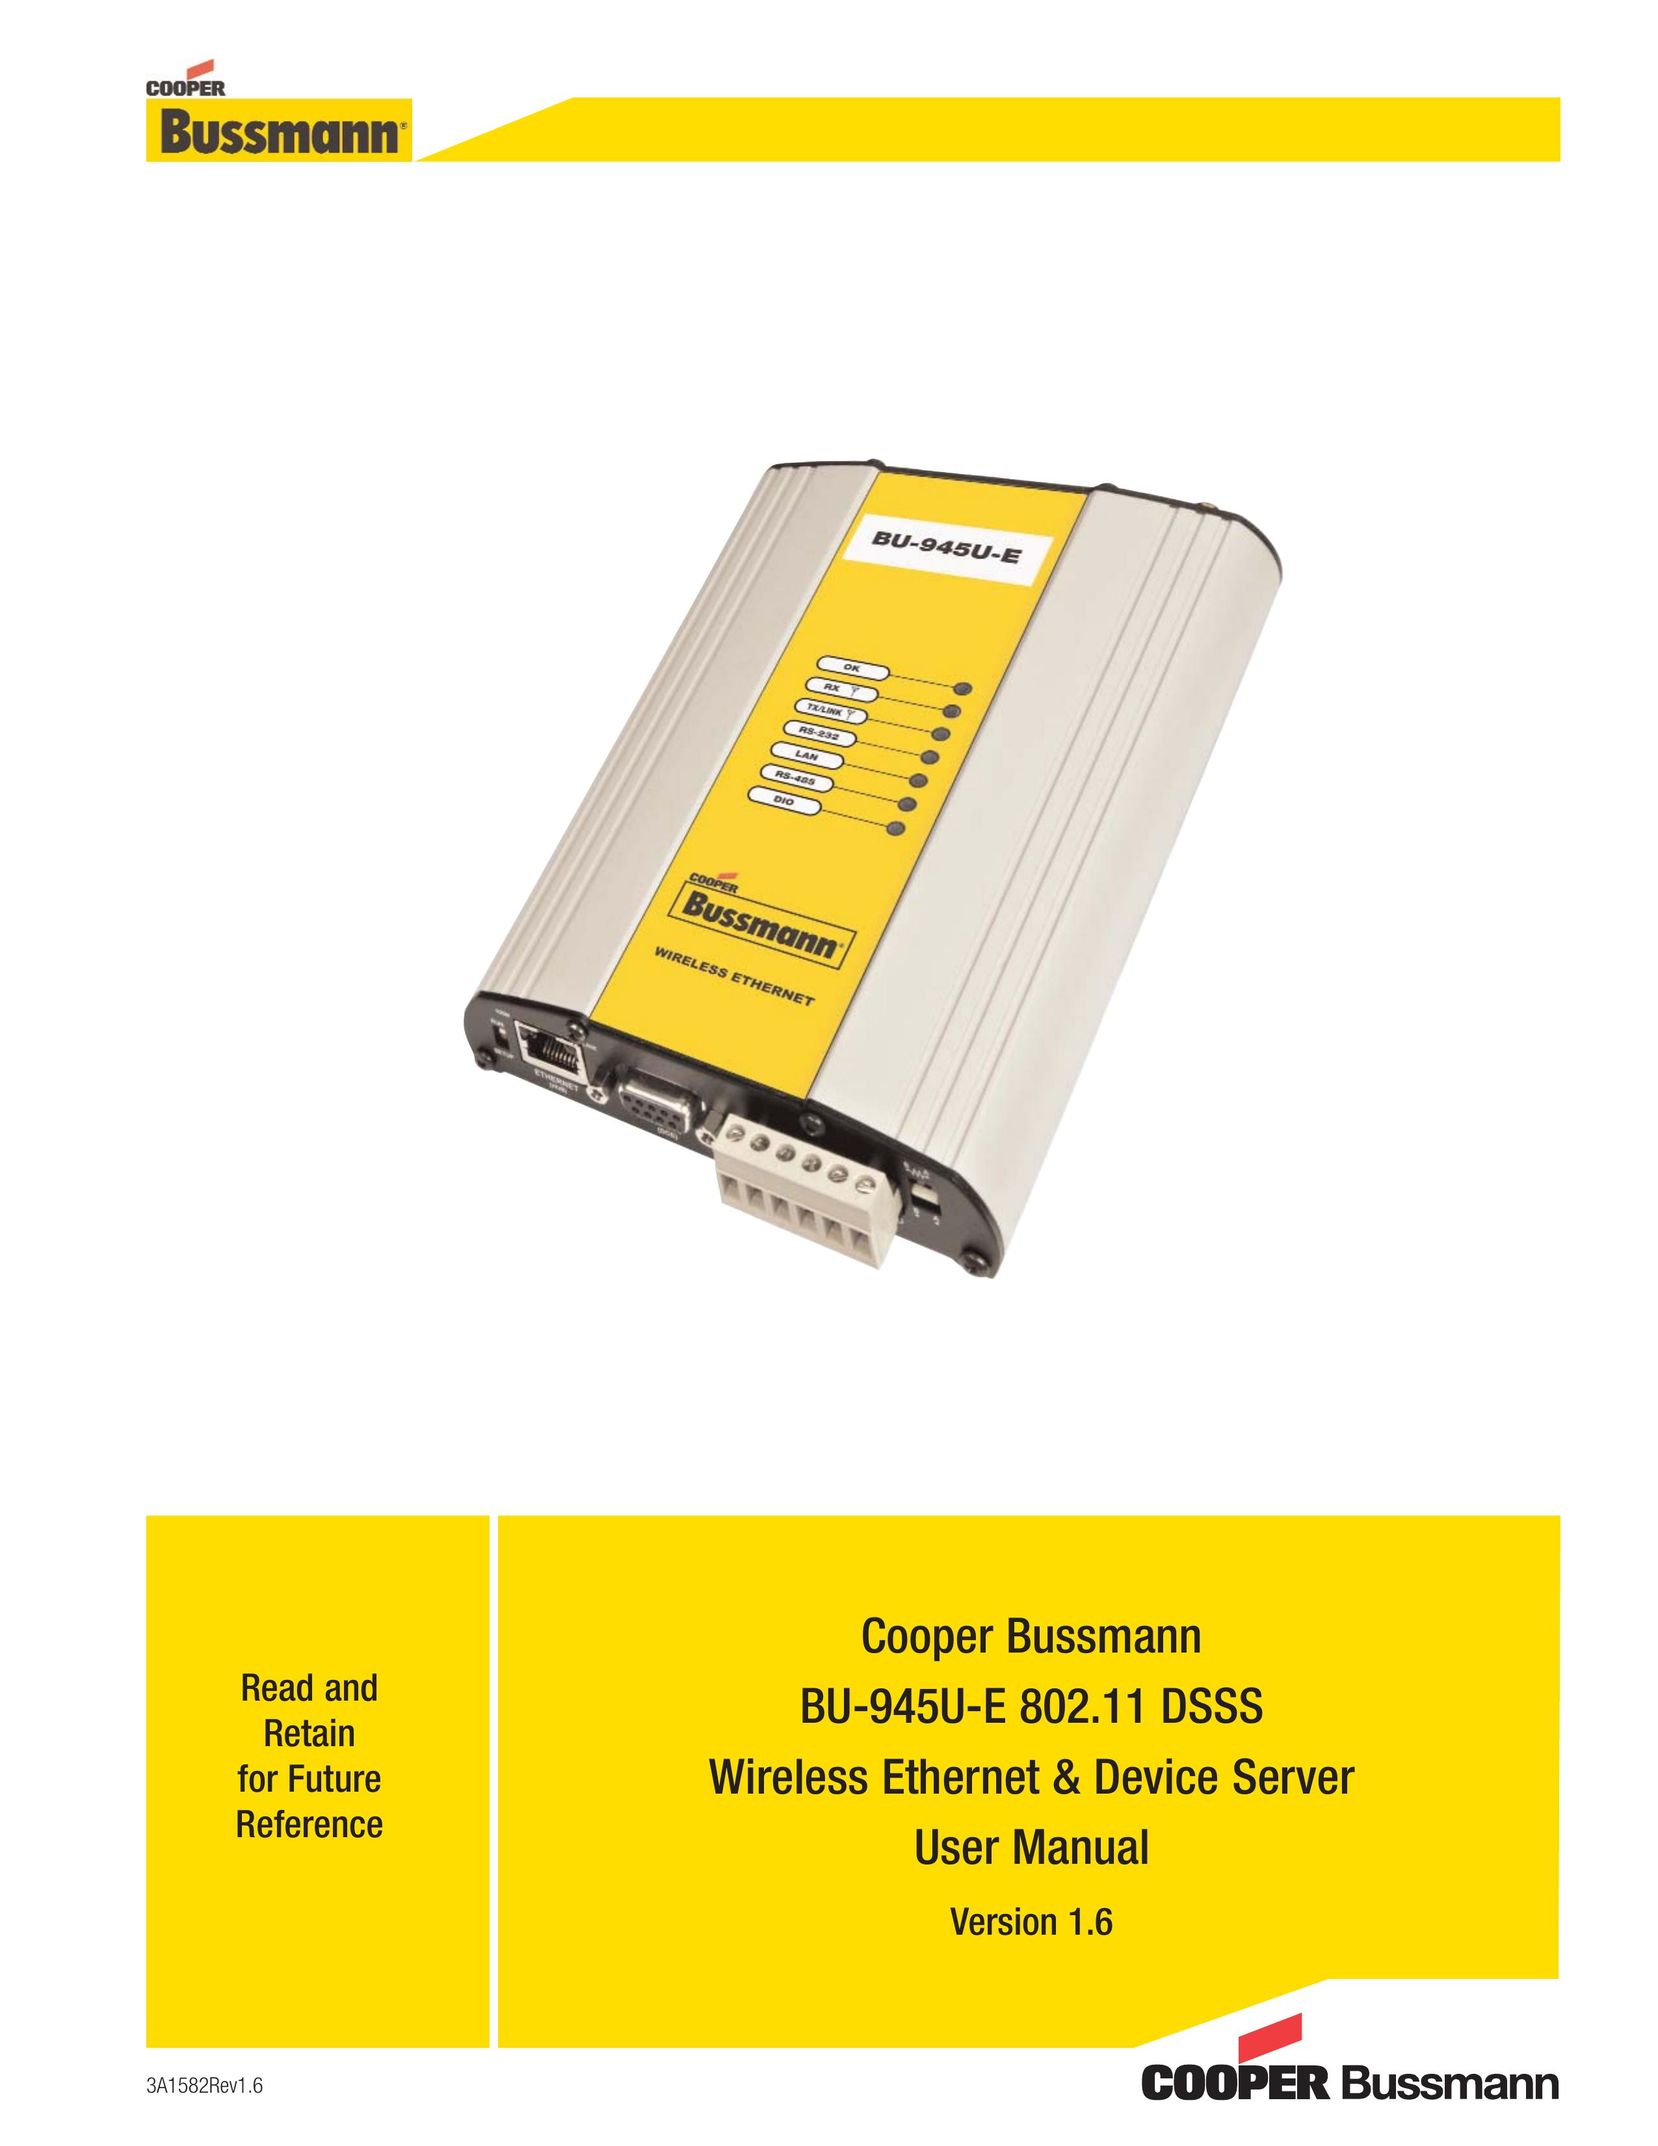 Cooper Bussmann BU-945U-E 802.11 DSSS Network Card User Manual